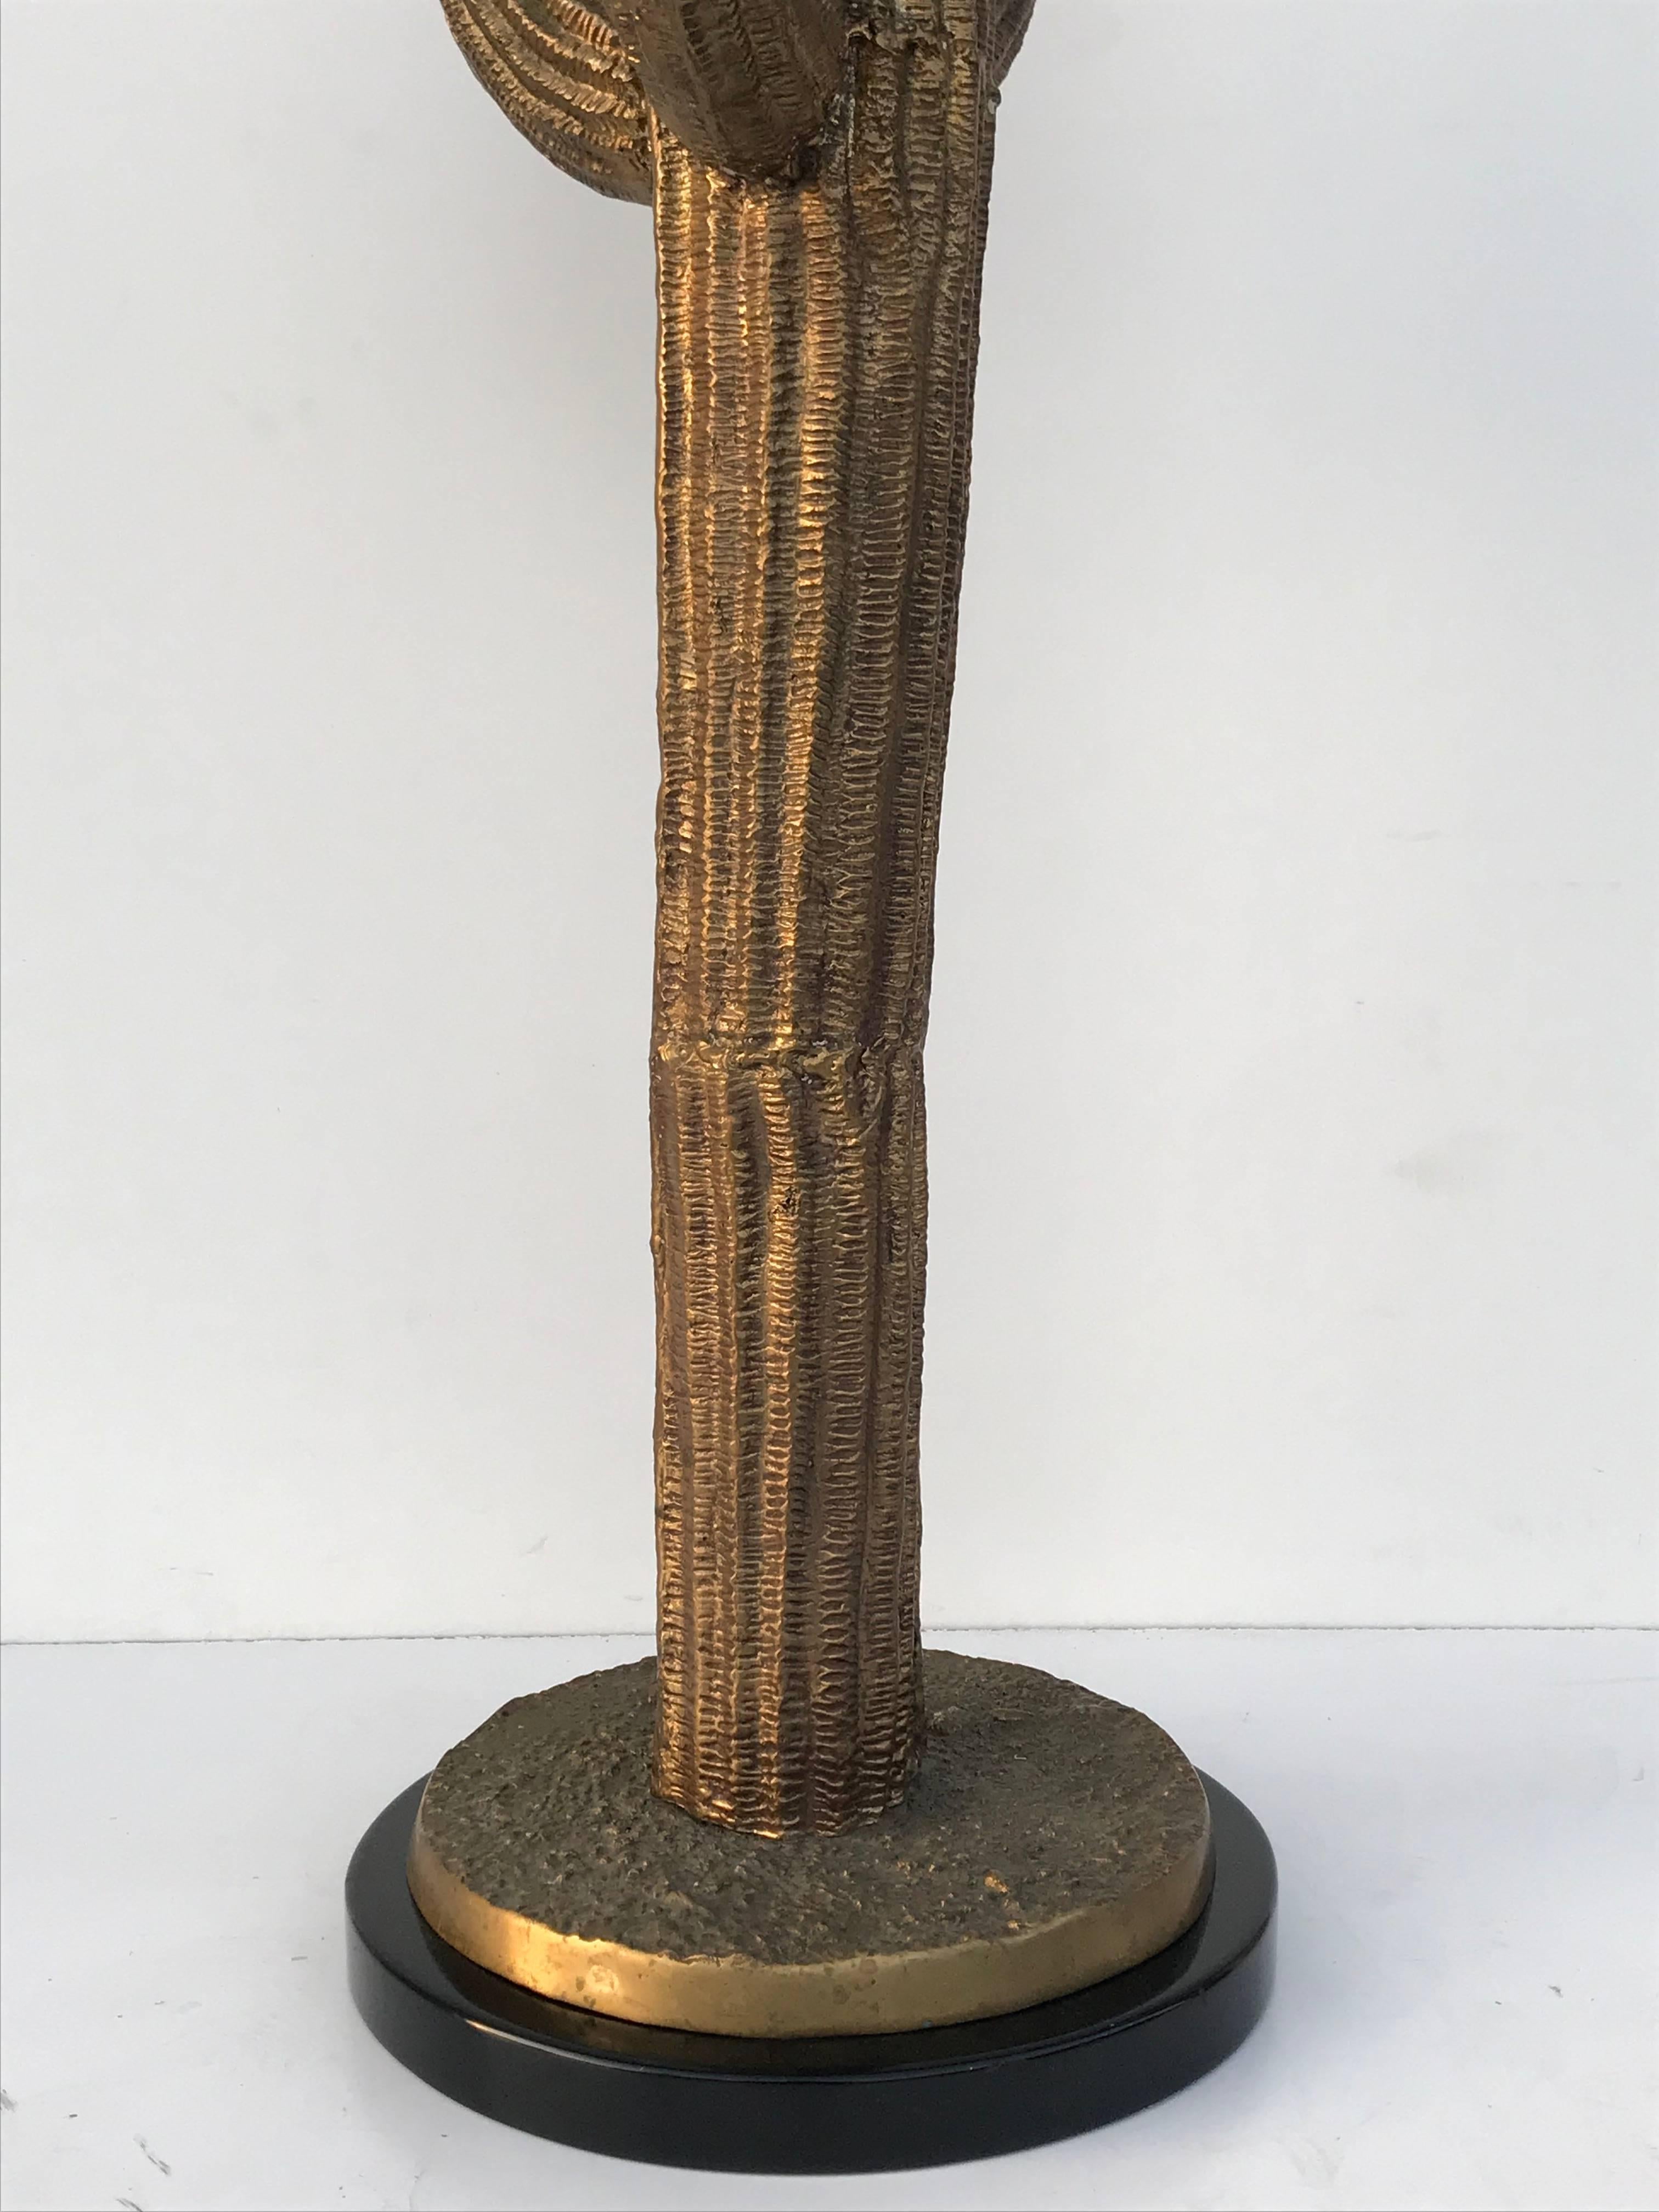 Brass Saguaro cactus sculpture.

Offered at Gallery Girasole